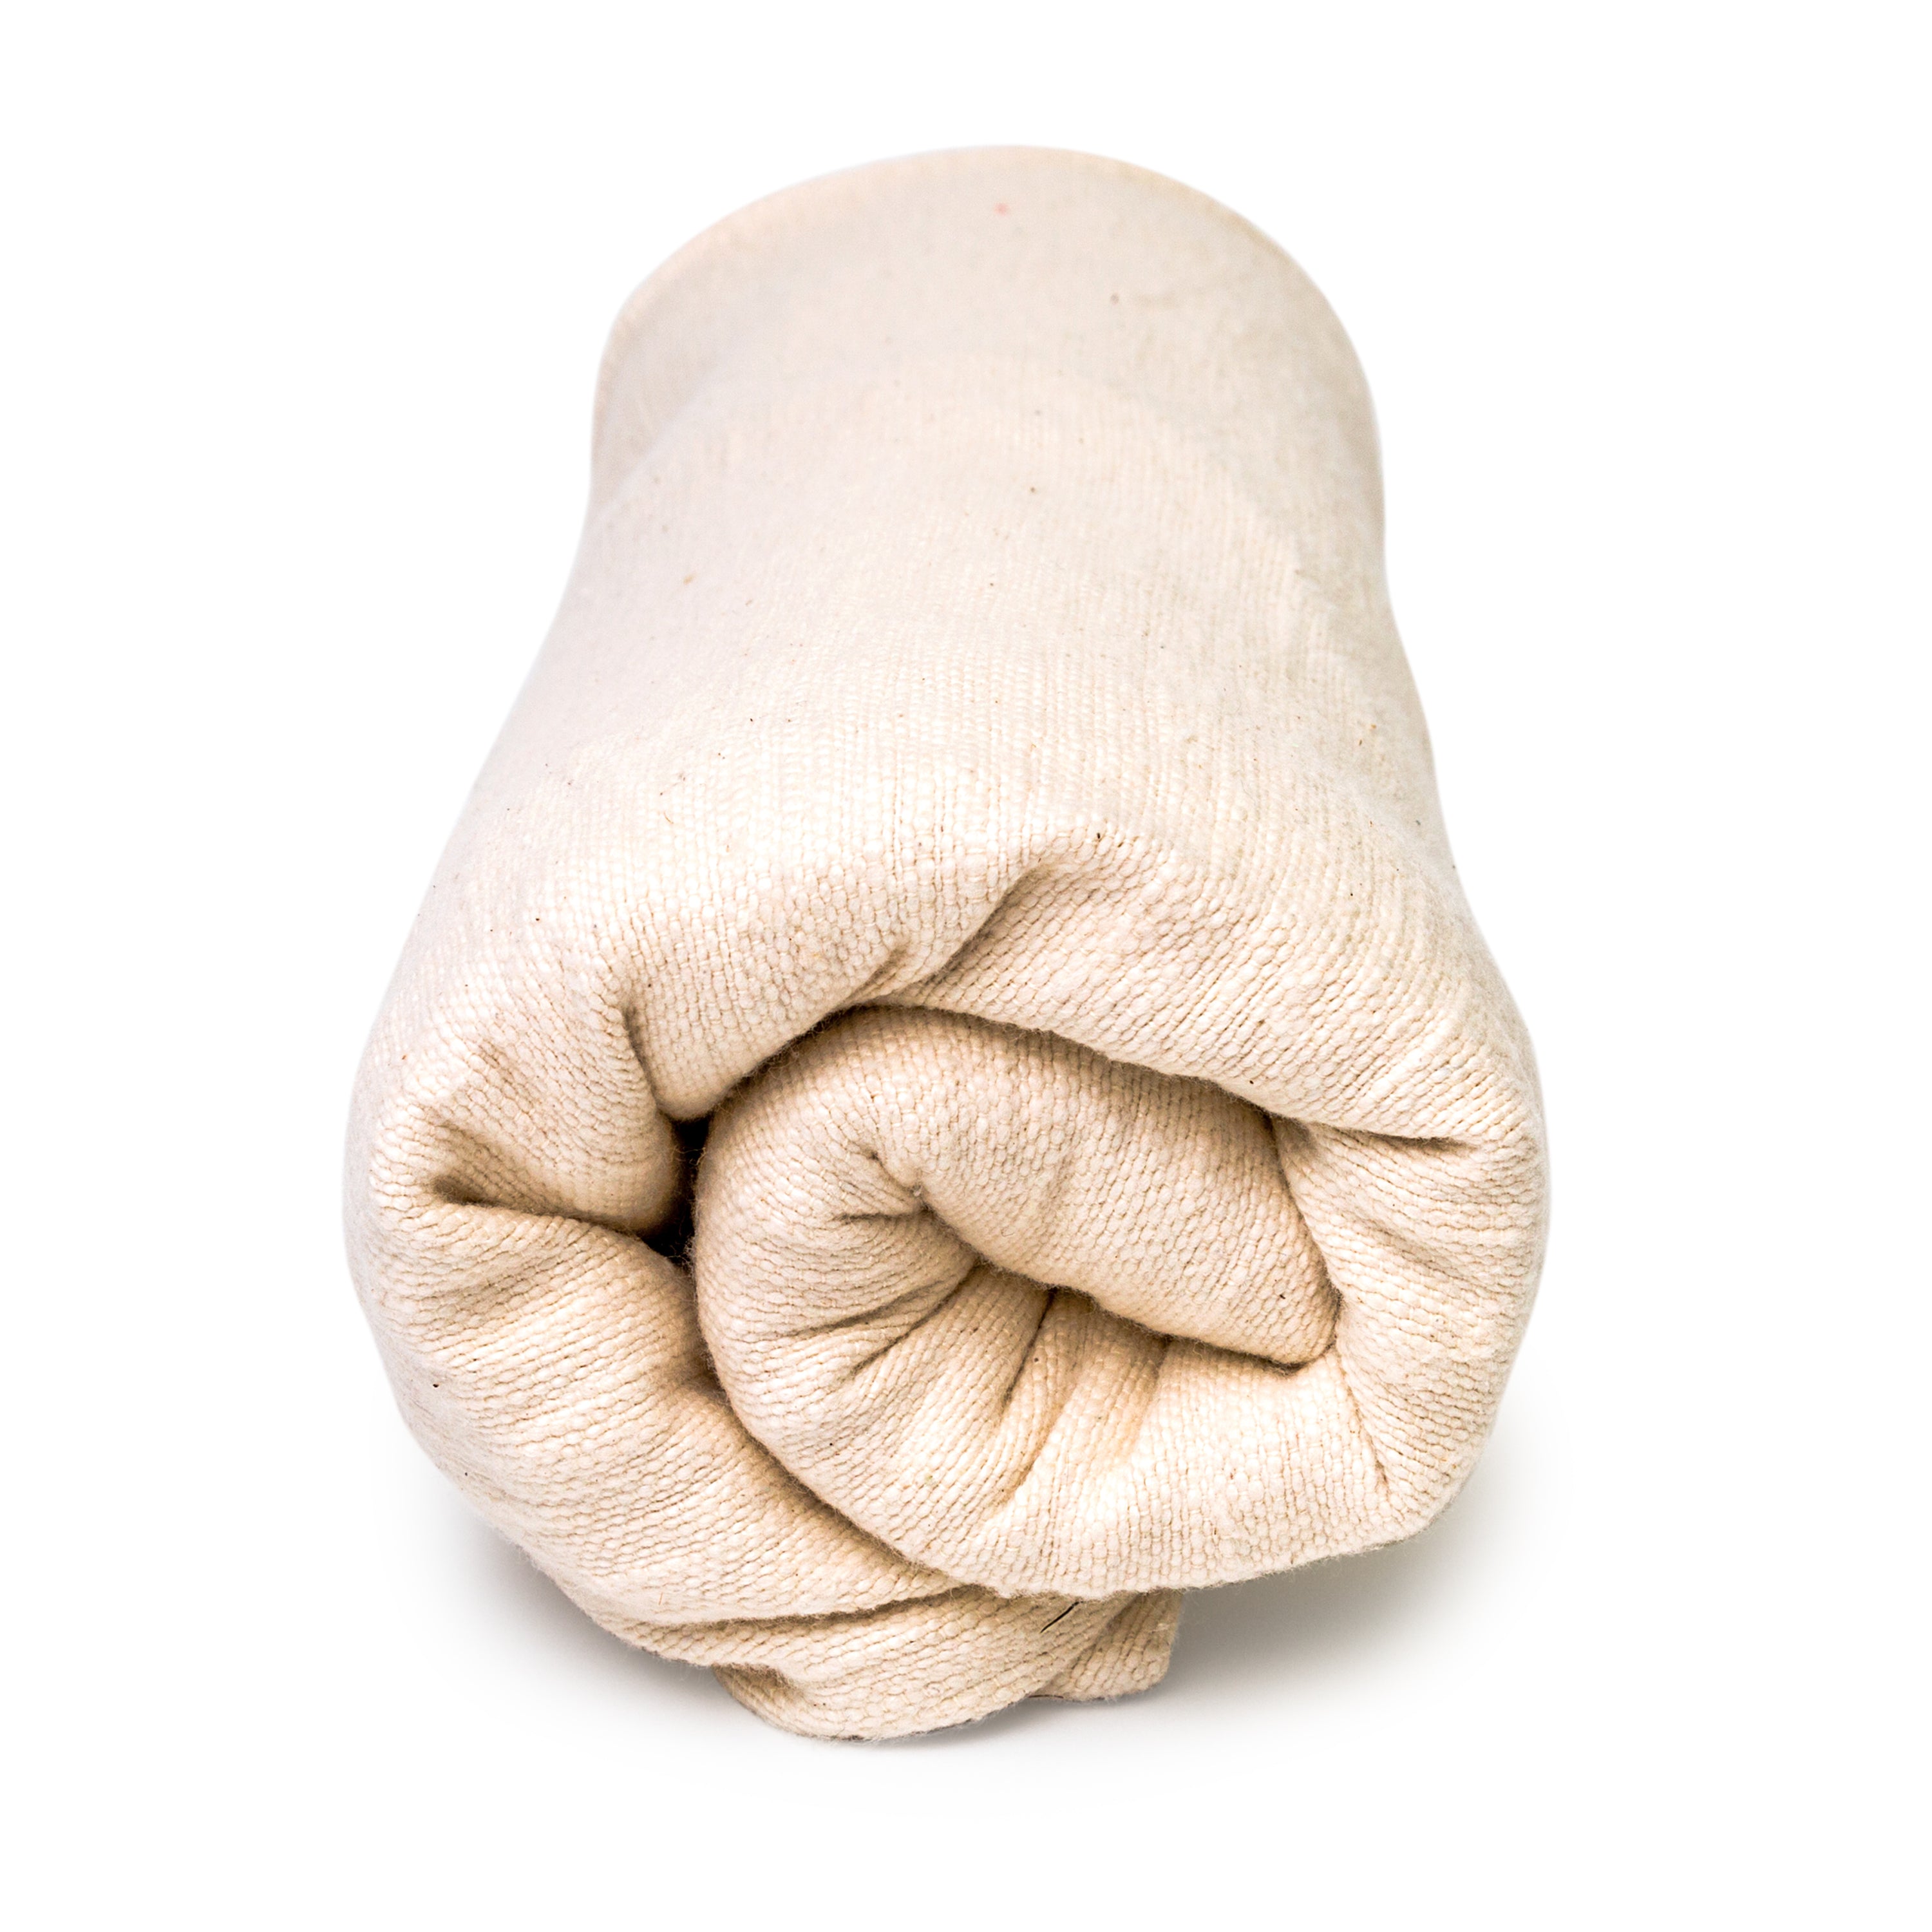 Mefree Cotton Yoga Blanket: Warmth & Versatility.